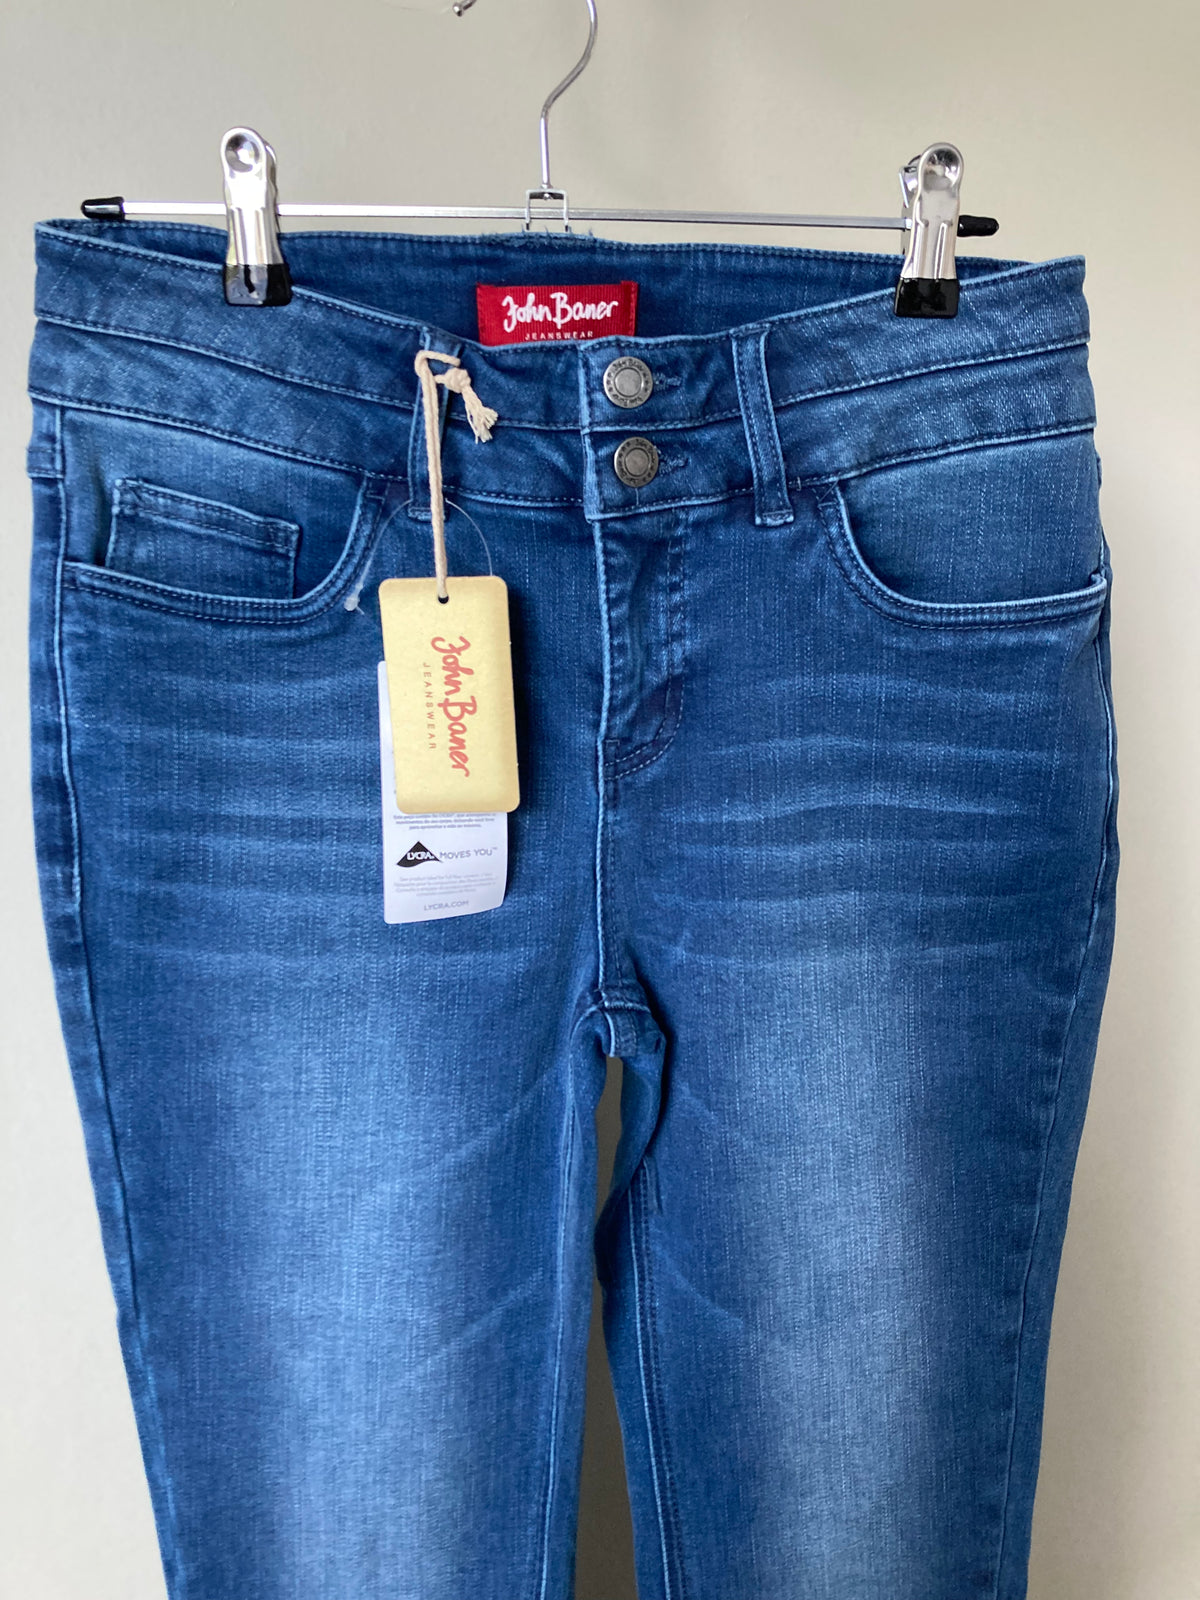 Blue denim jeans by JOHN BANER - Size 10